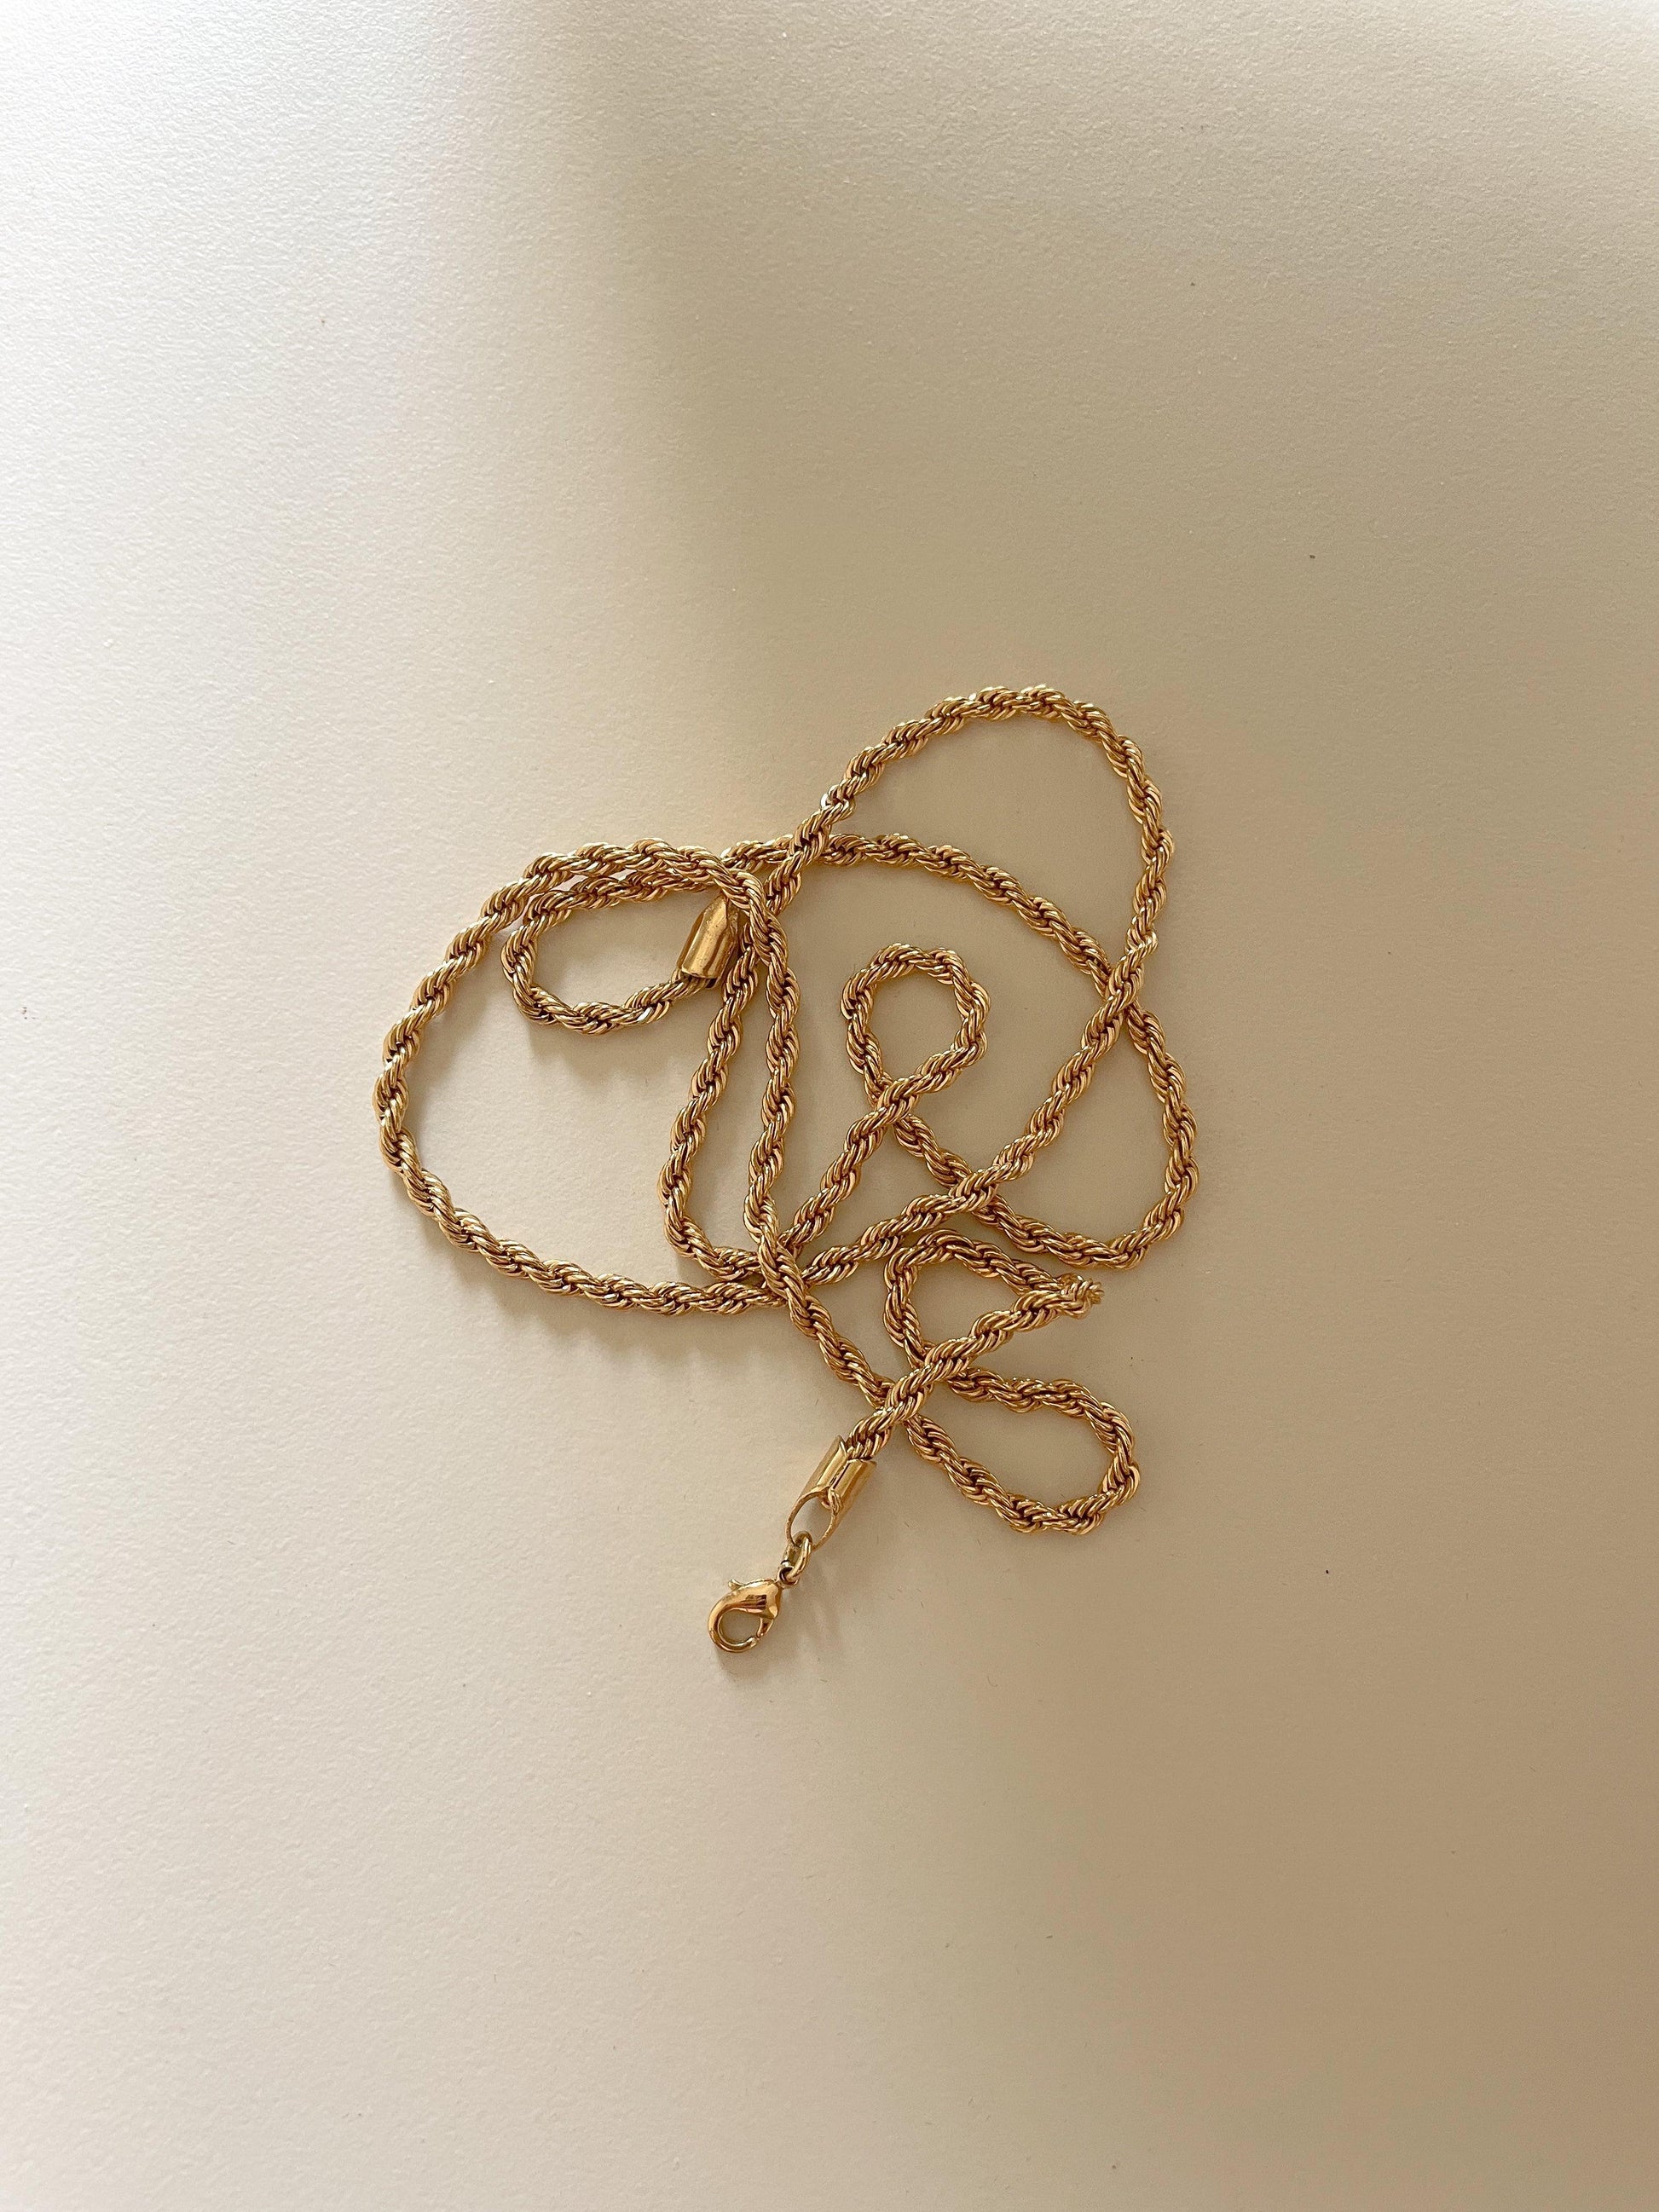 Sofia Rope Chain Necklace - MILANA JEWELRY 